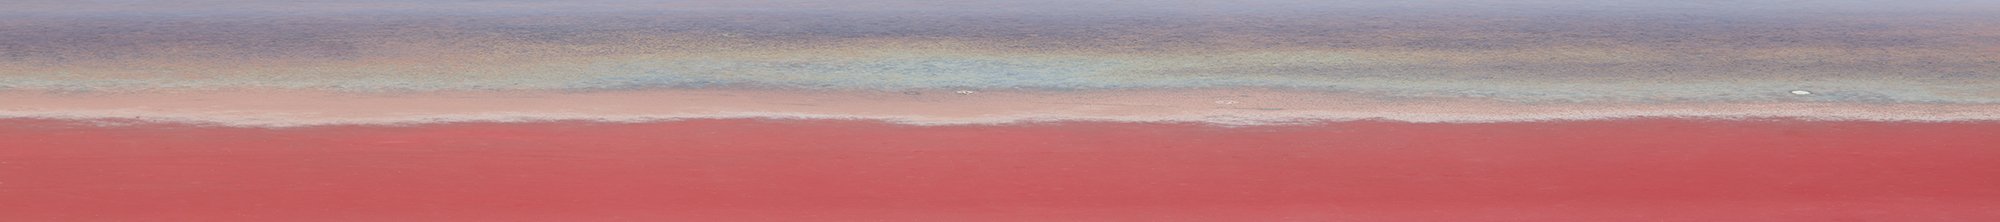 Selenium Beach and Graphene Oxide Ocean, Planet LHS 475 b 